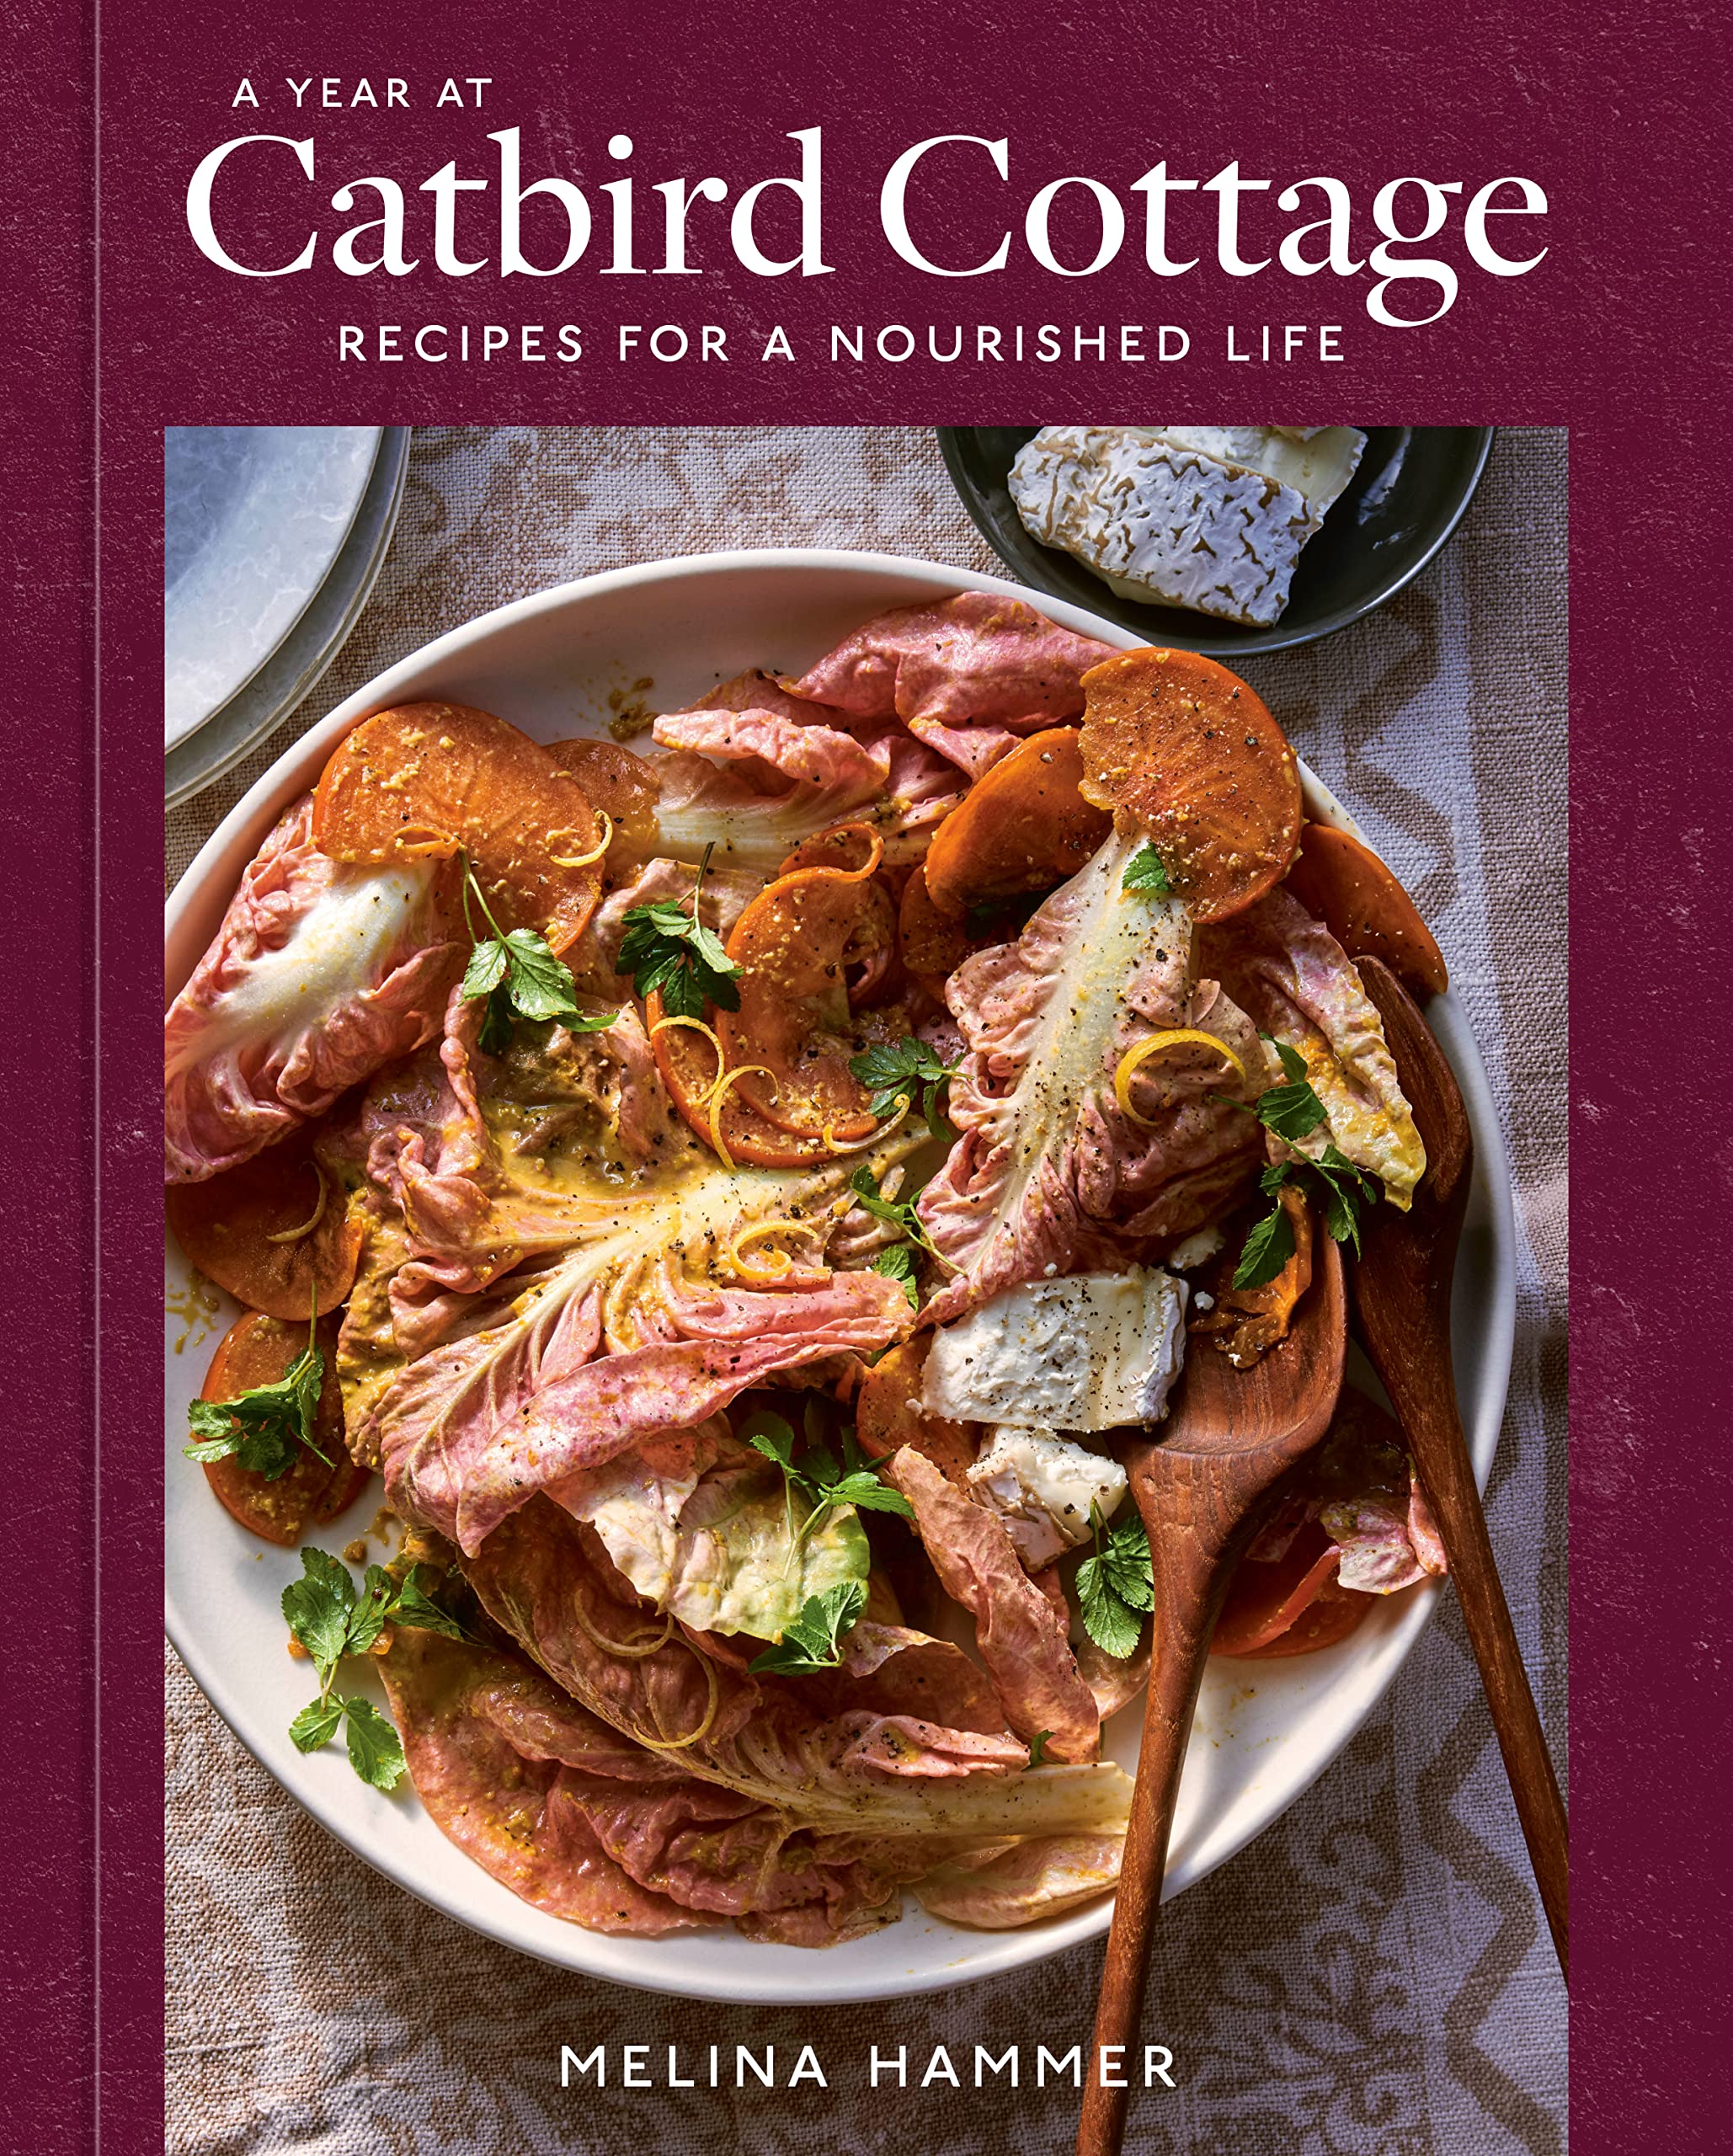 Catbird Cottage cookbook by Melina Hammer